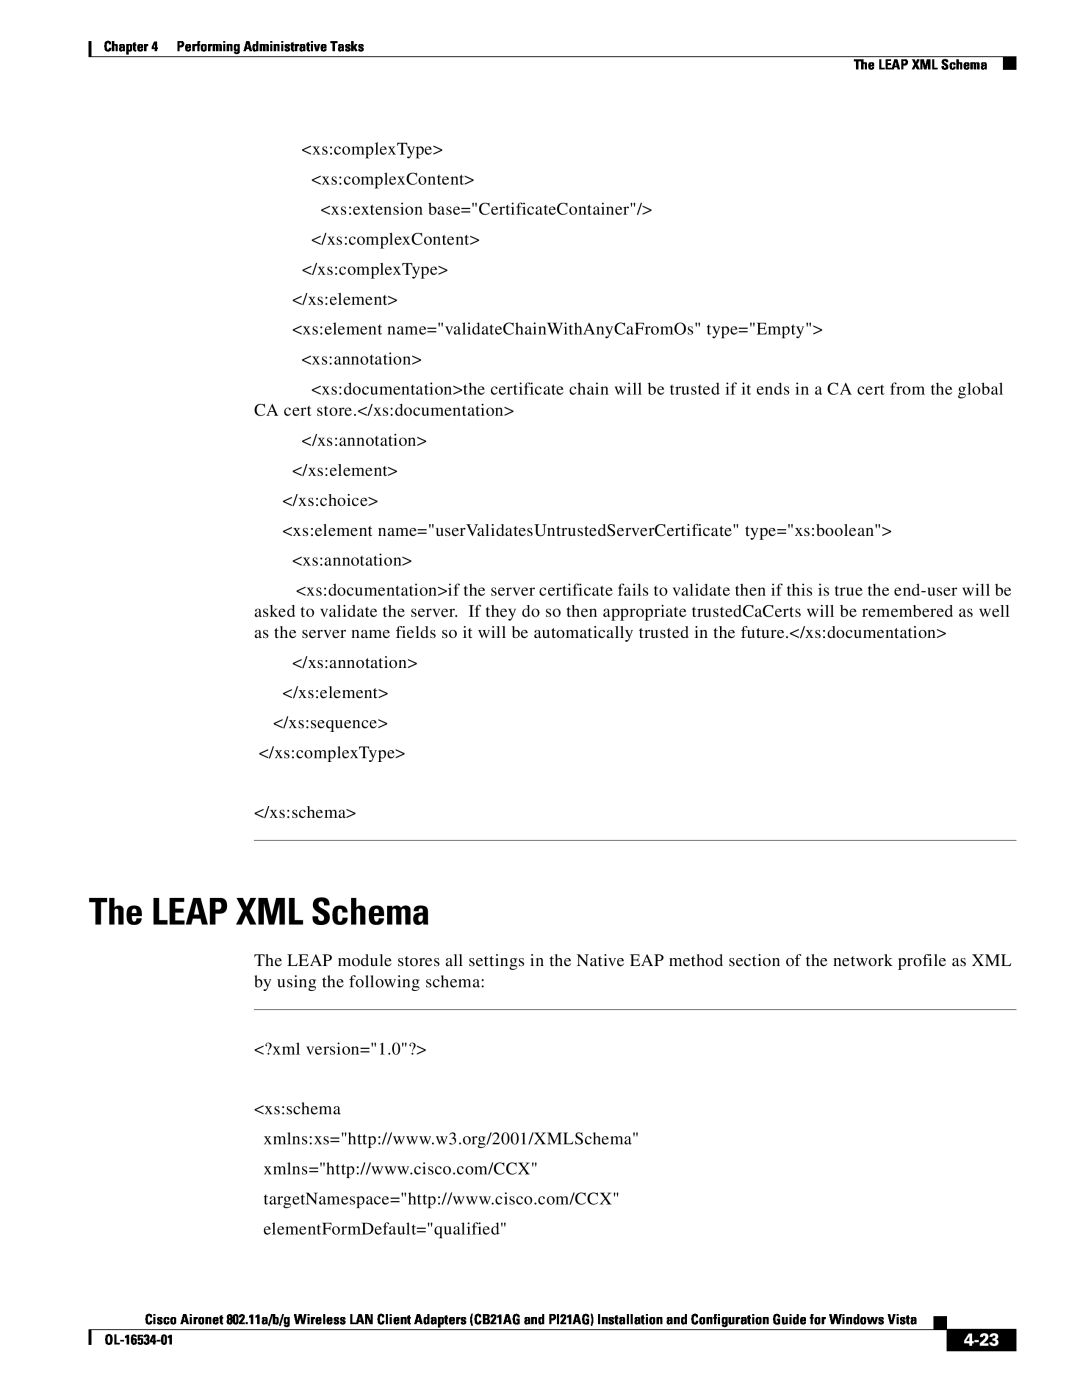 Cisco Systems CB21AG, PI21AG manual The LEAP XML Schema, 4-23 